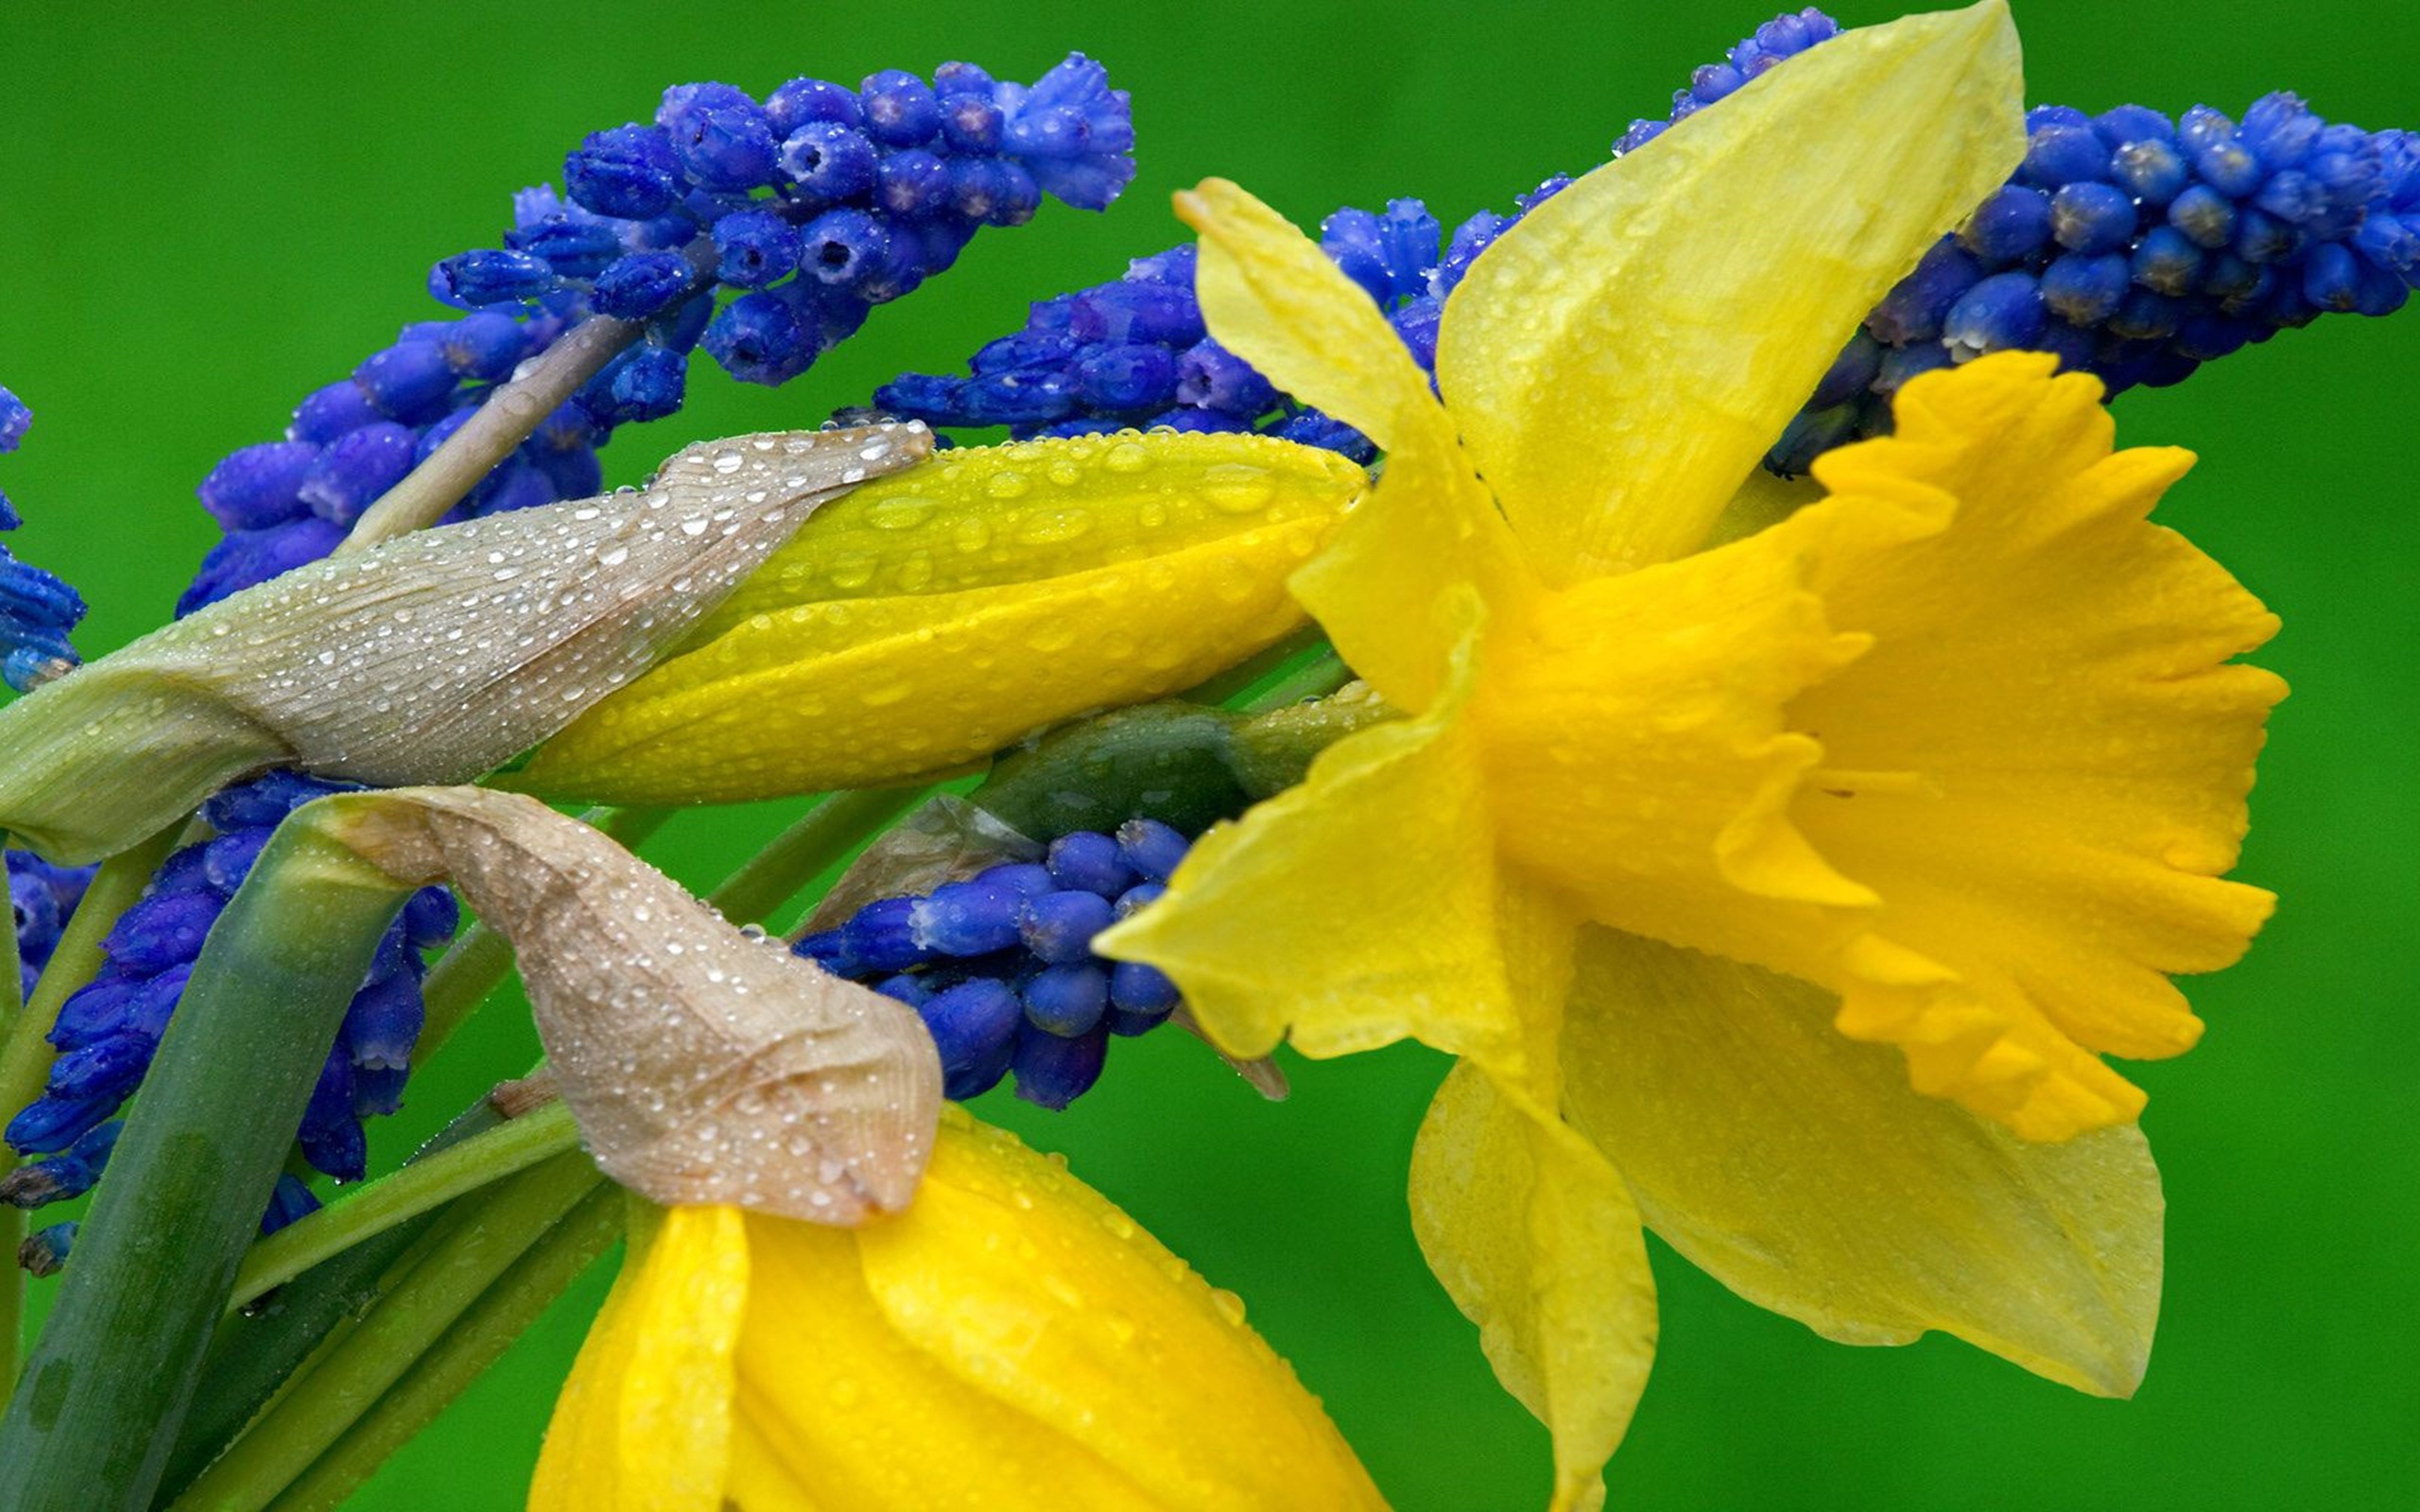 Grape hyacinth wallpaper, Yellow and blue flowers, HD background, Nature's harmony, 2560x1600 HD Desktop